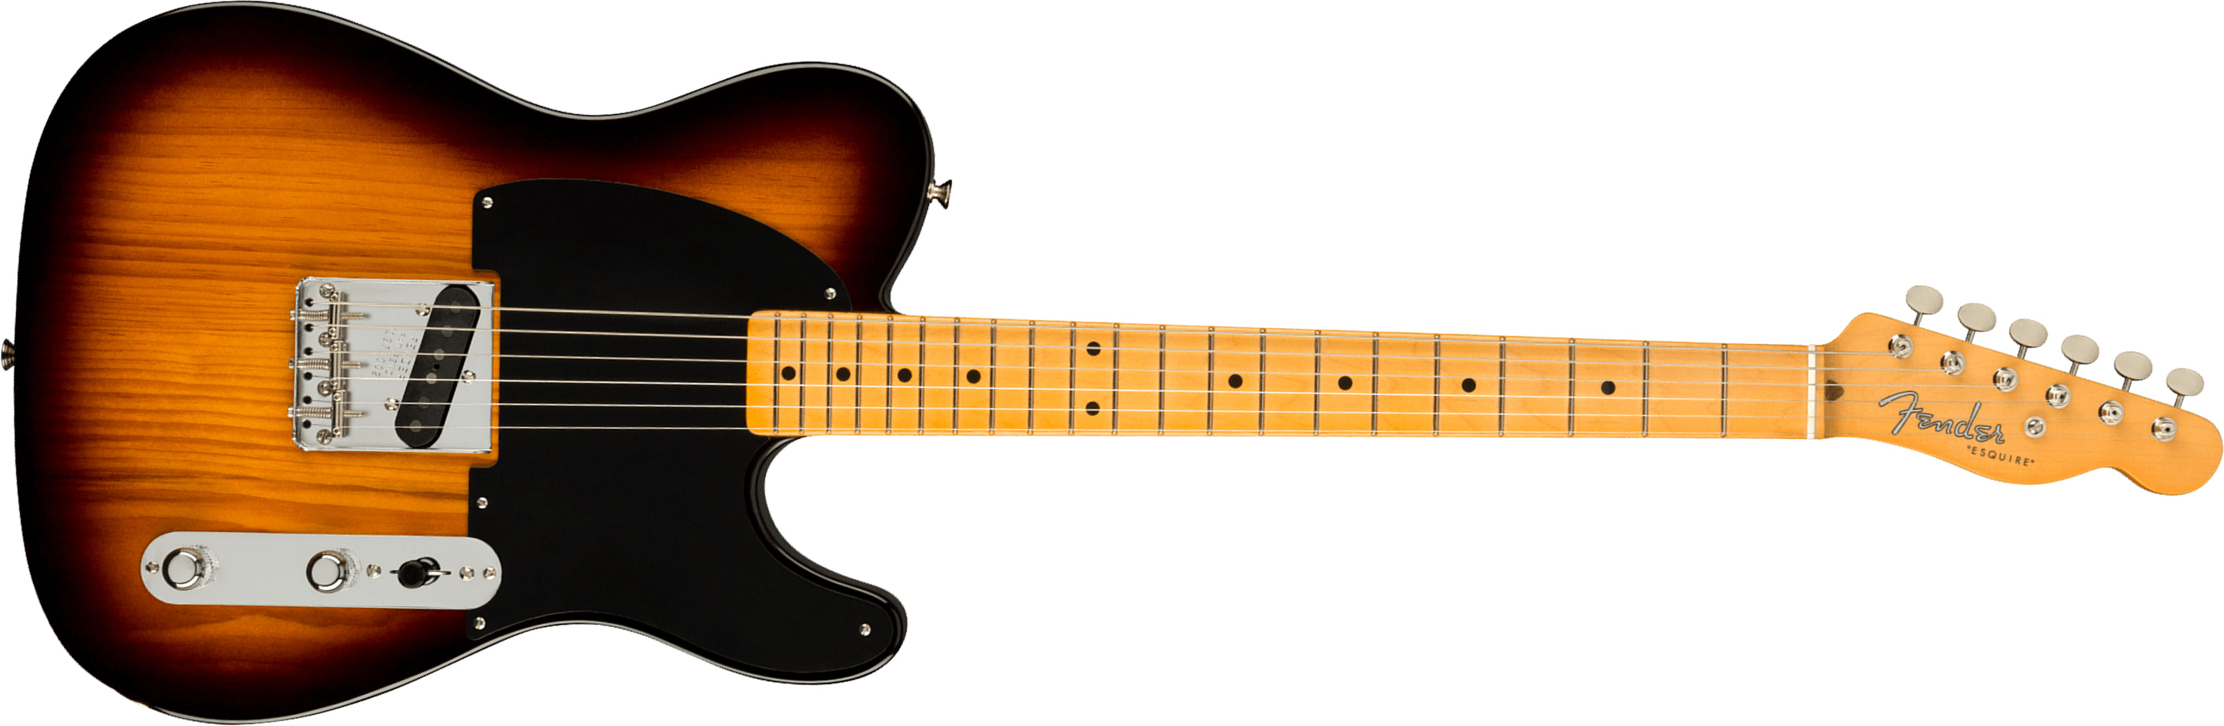 Fender Esquire/tele 70th Anniversary Usa Mn - 2-color Sunburst - Televorm elektrische gitaar - Main picture